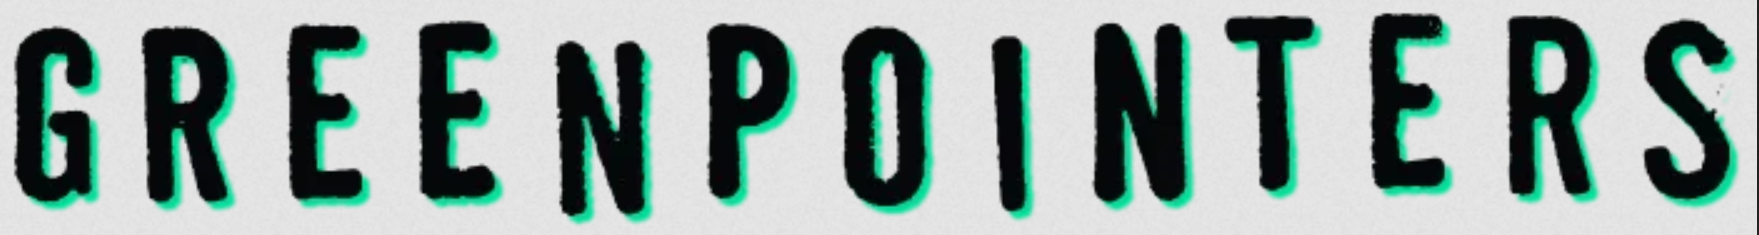 Greenpointers Logo